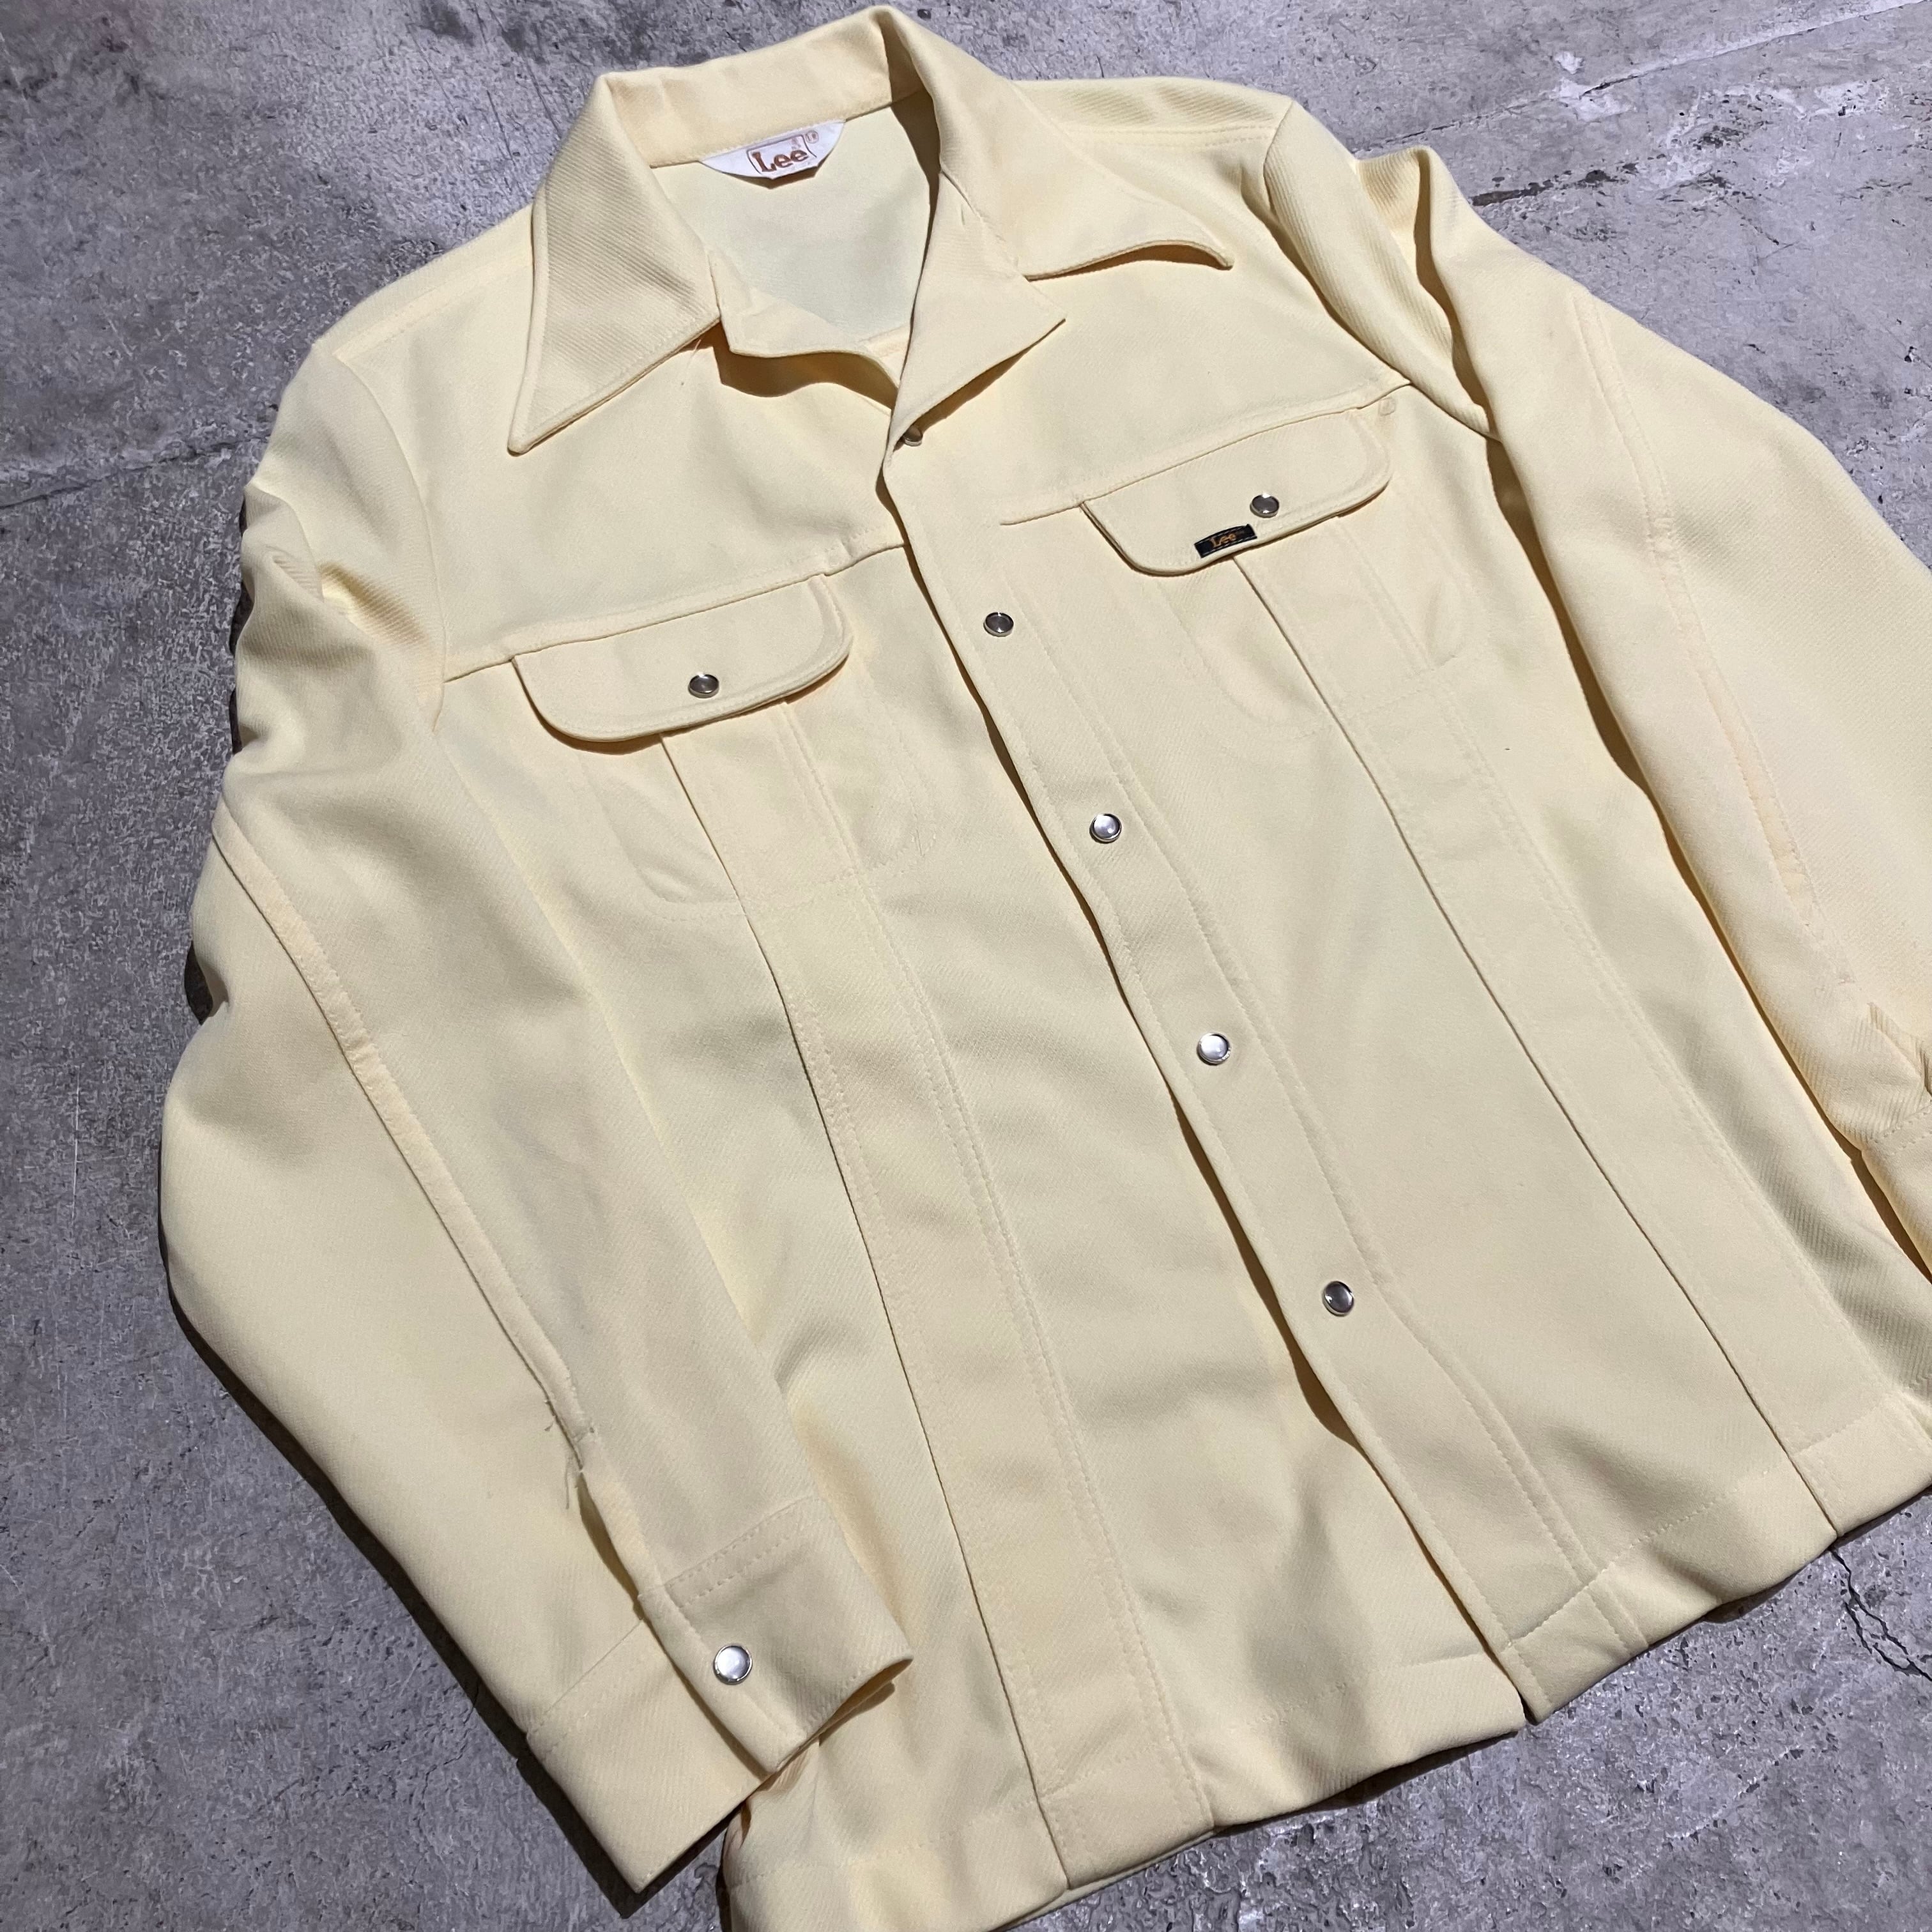 70s Lee / USA製 ウエスタンシャツジャケット サイズL/R イエロー